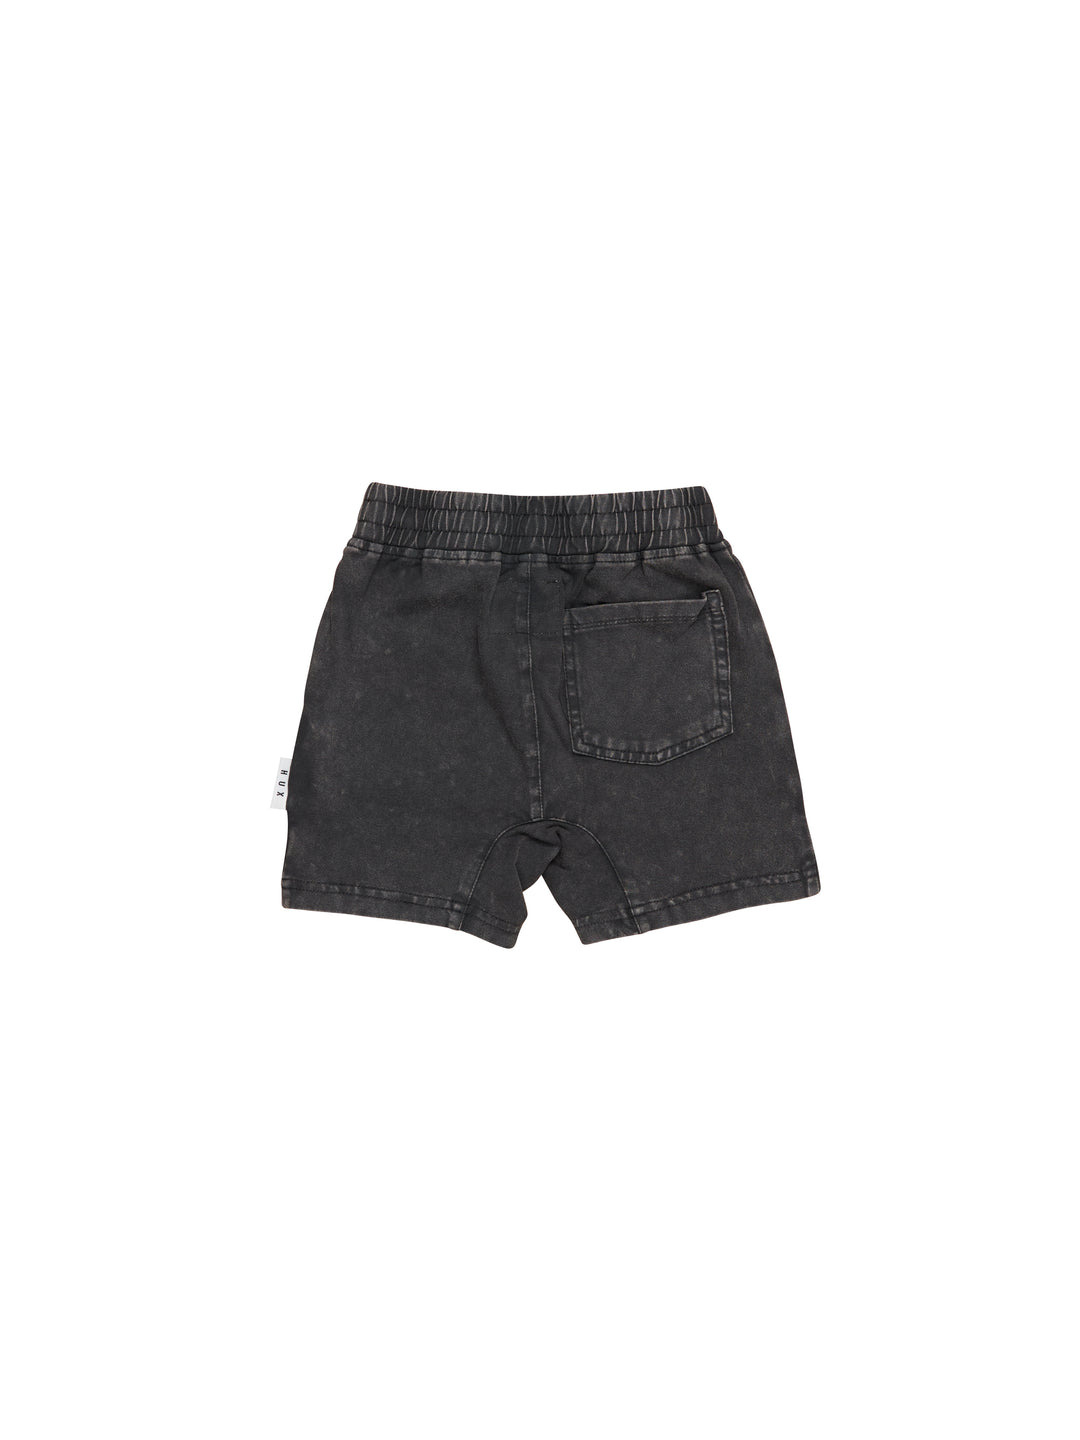 Huxbaby Slouch Shorts - Vintage Black